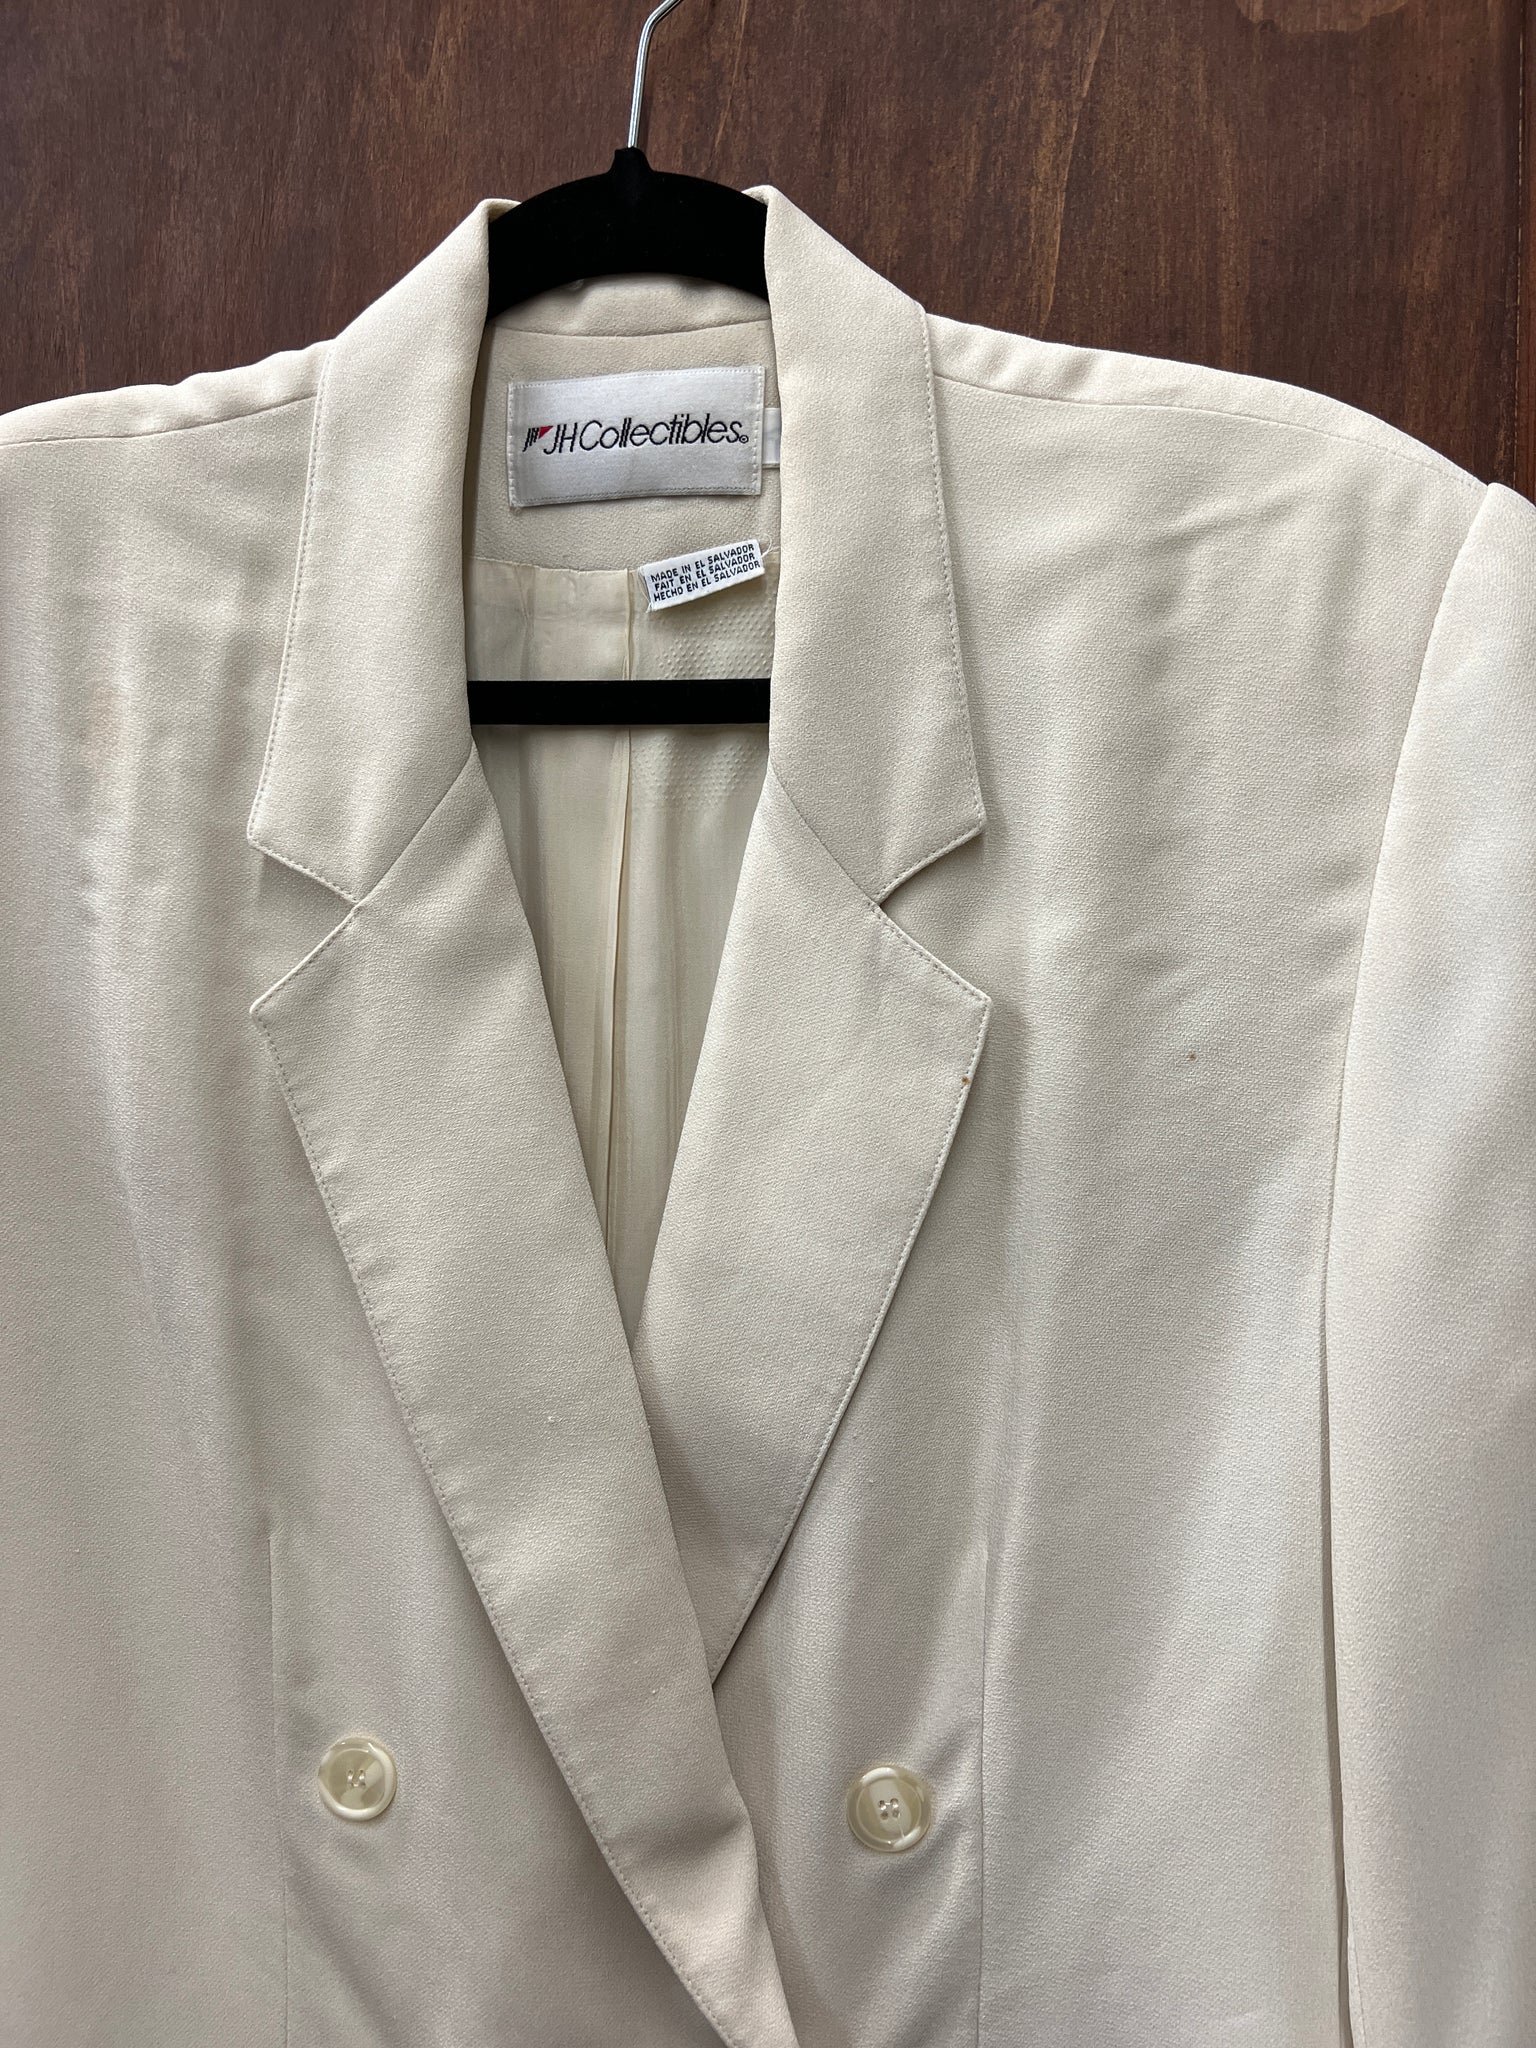 1980s JACKET- JH Collectibles cream oversize blazer